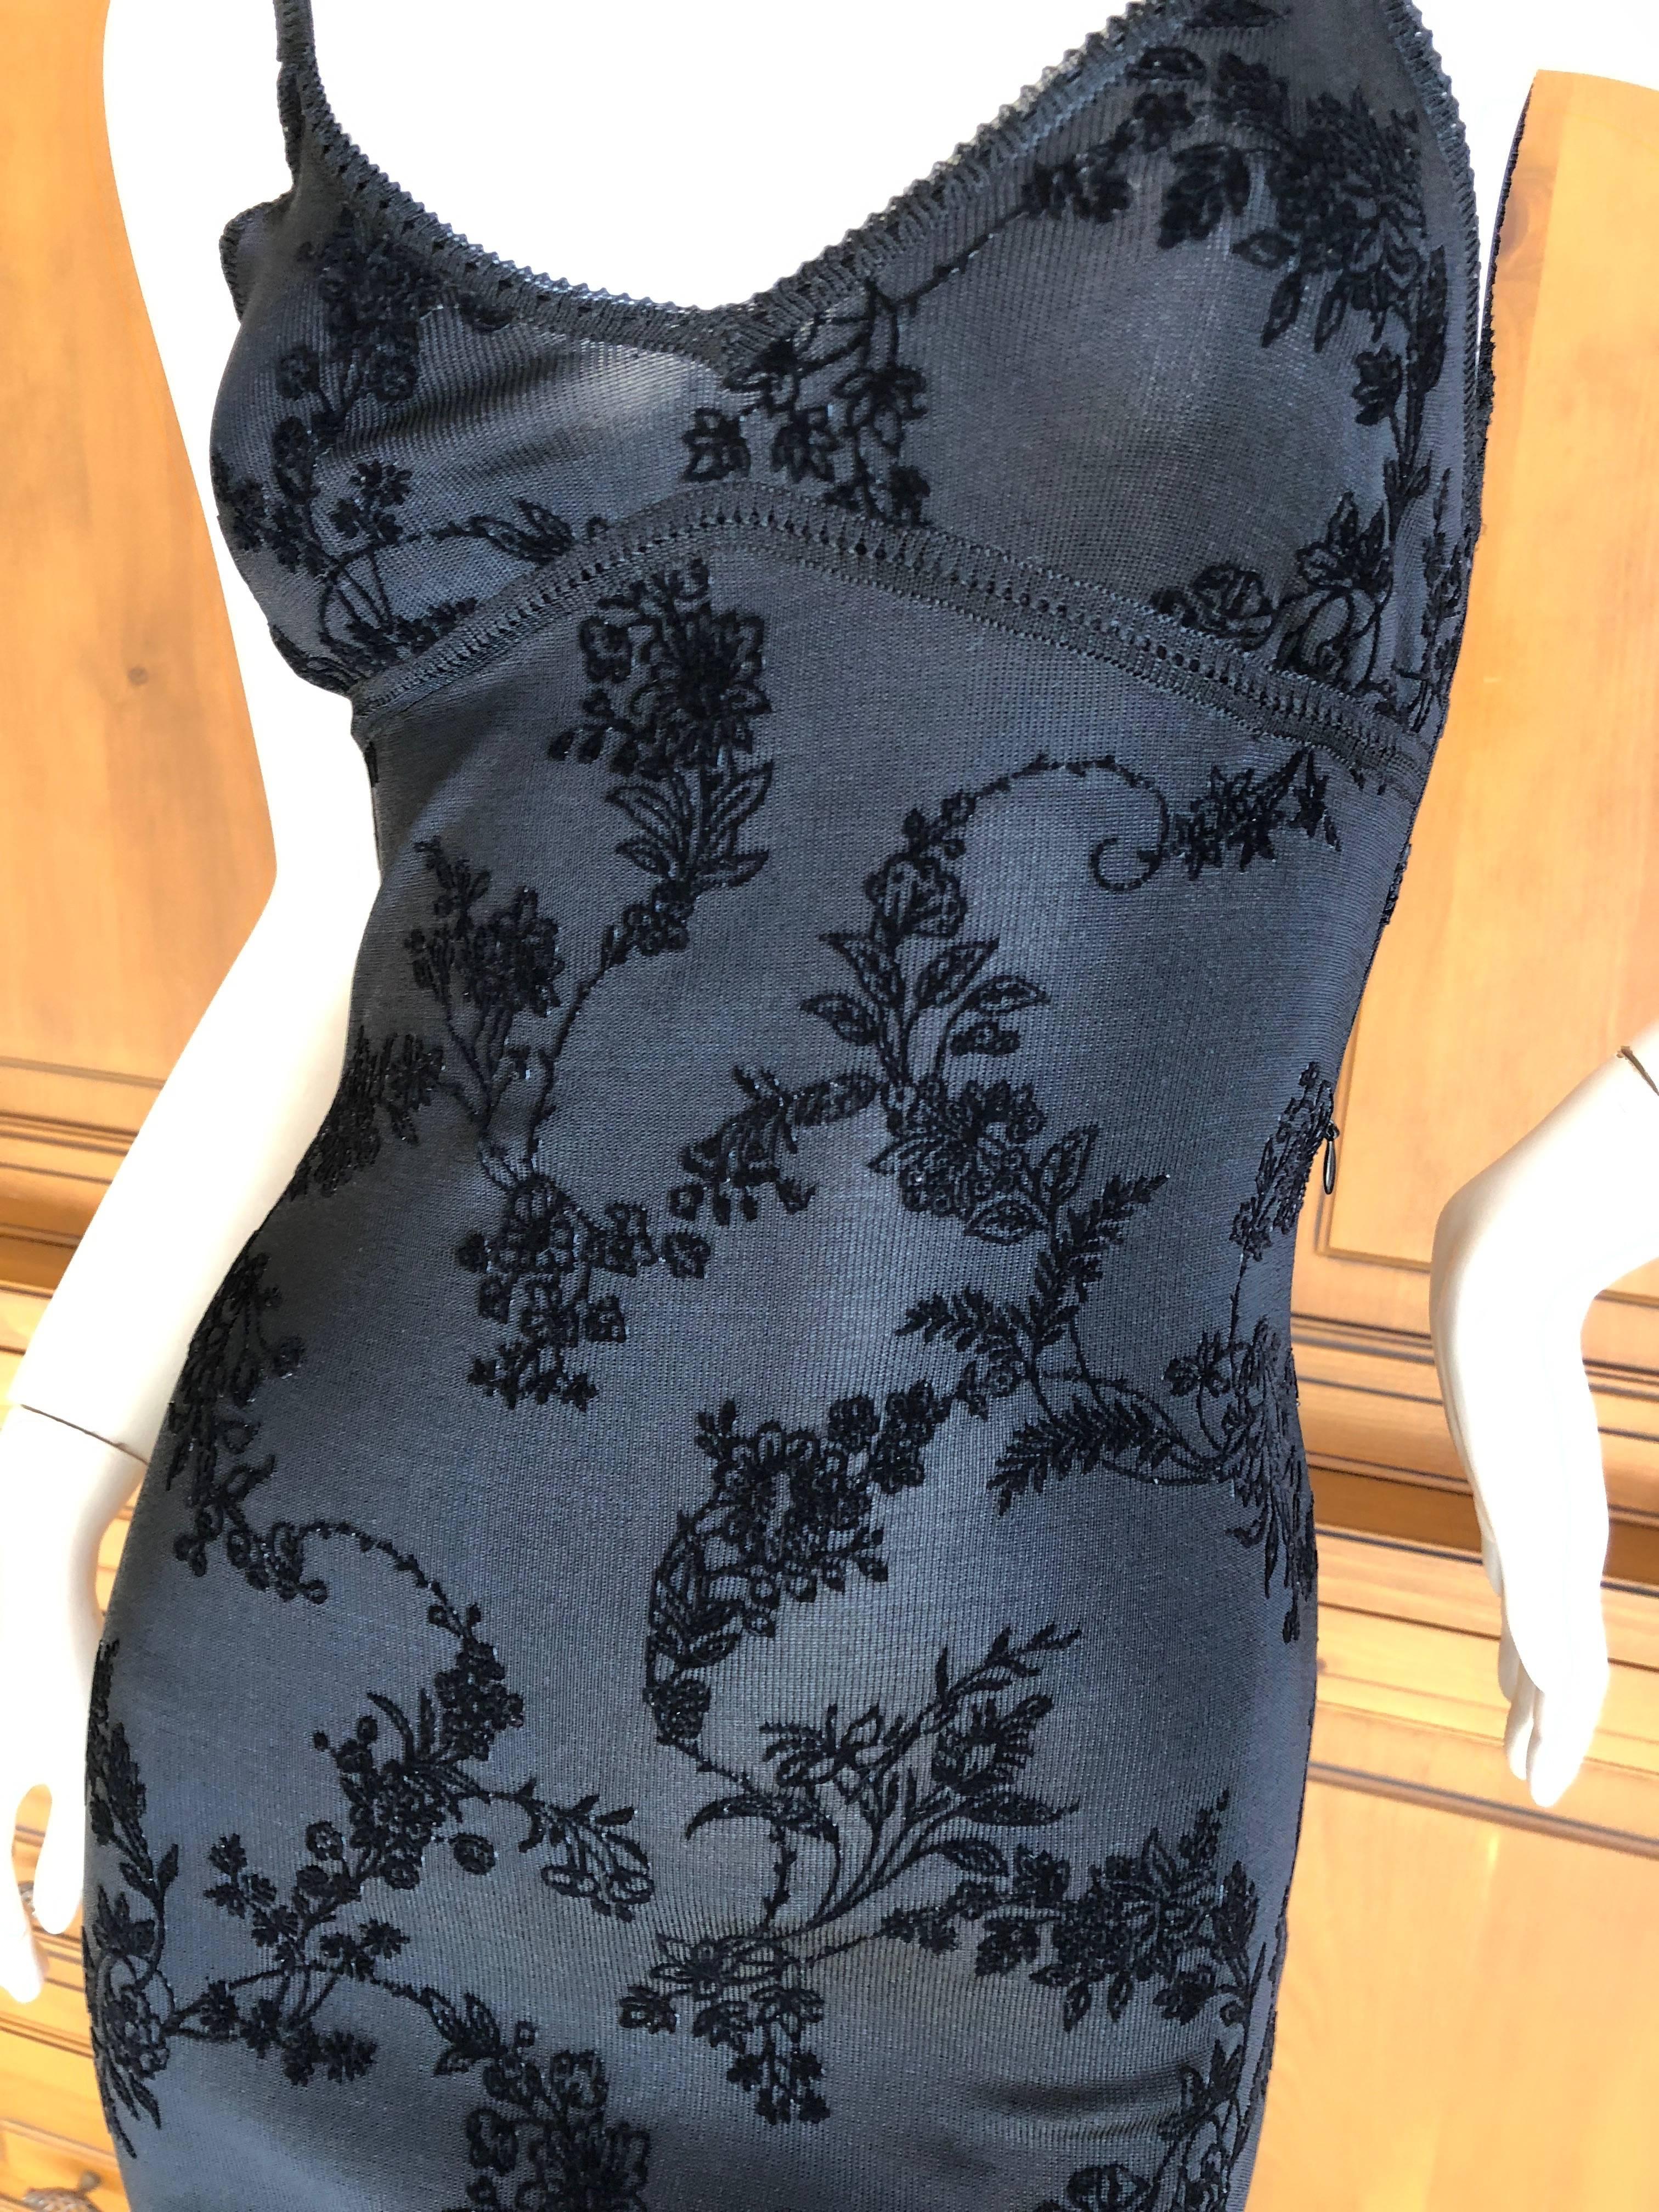 Women's John Galliano 1998 SS 'Haute Bohemia' Collection Sheer Little Black Dress.